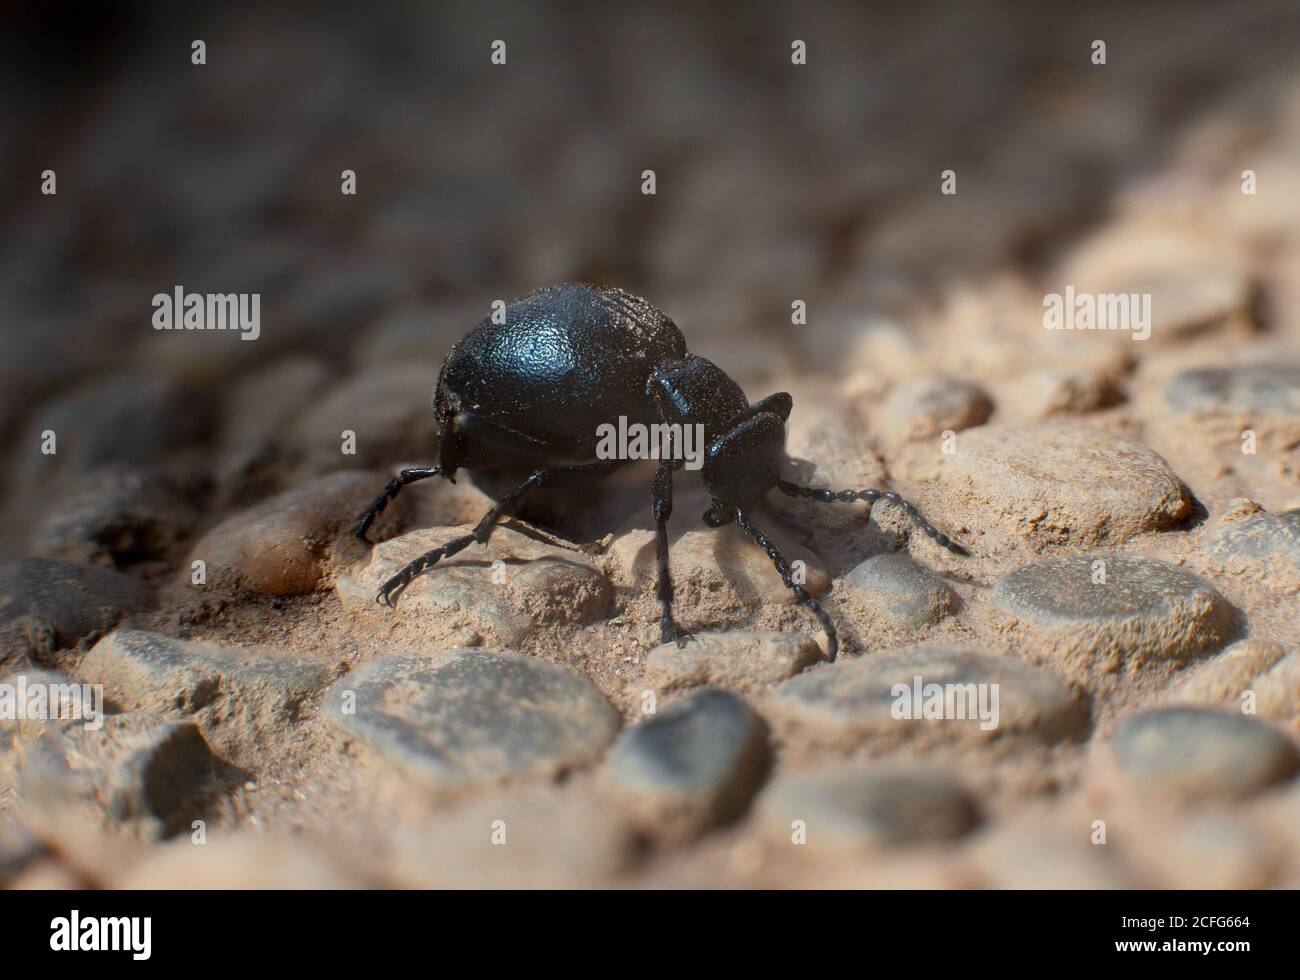 black ground beetle, insect, on stones macro photo Stock Photo